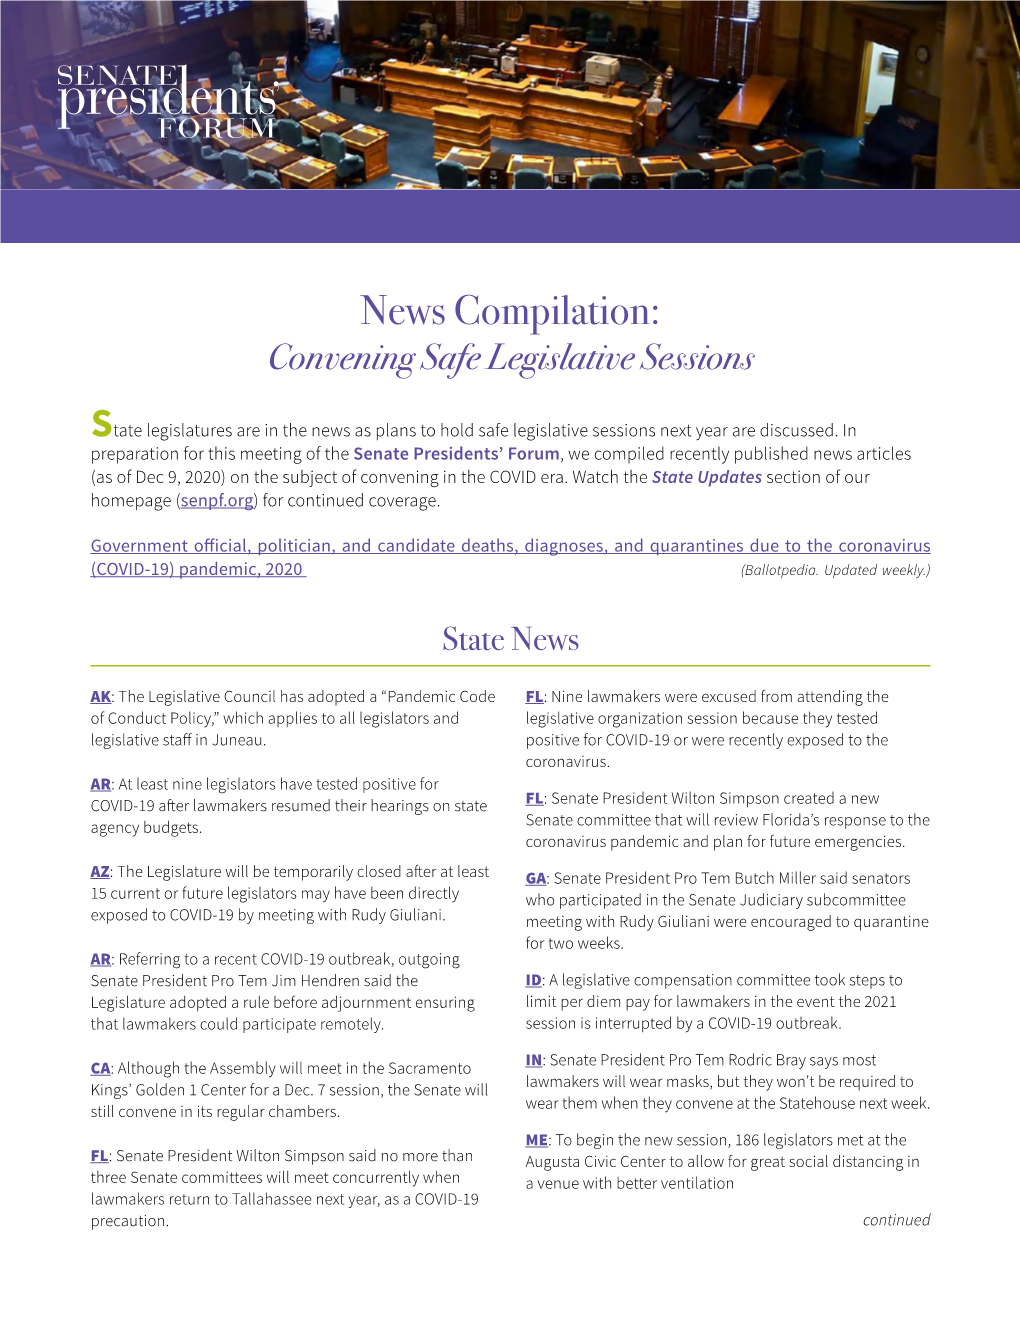 News Compilation: Convening Safe Legislative Sessions